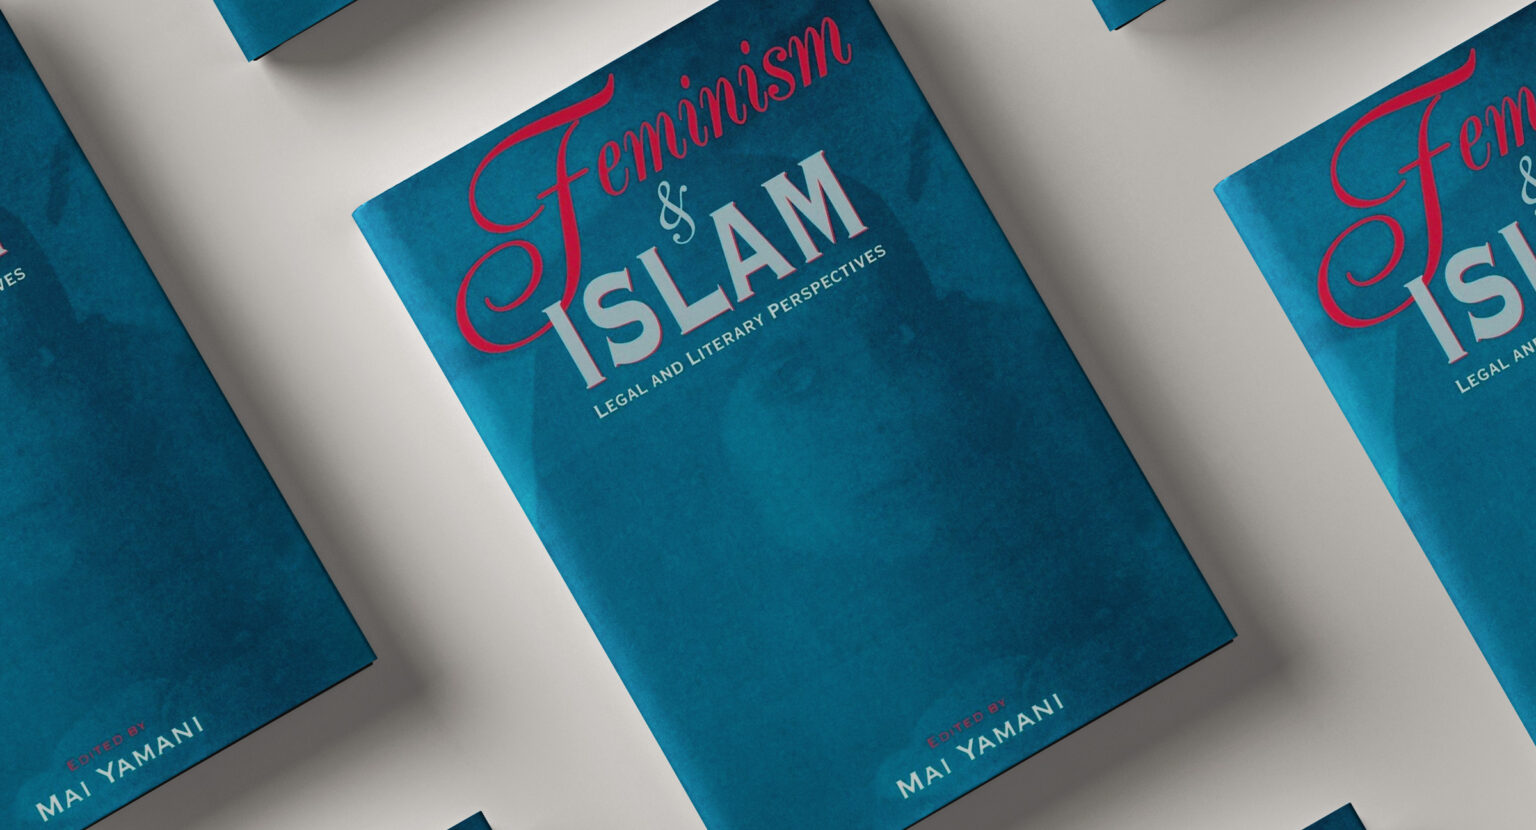 Image of several copies of Feminism & Islam book